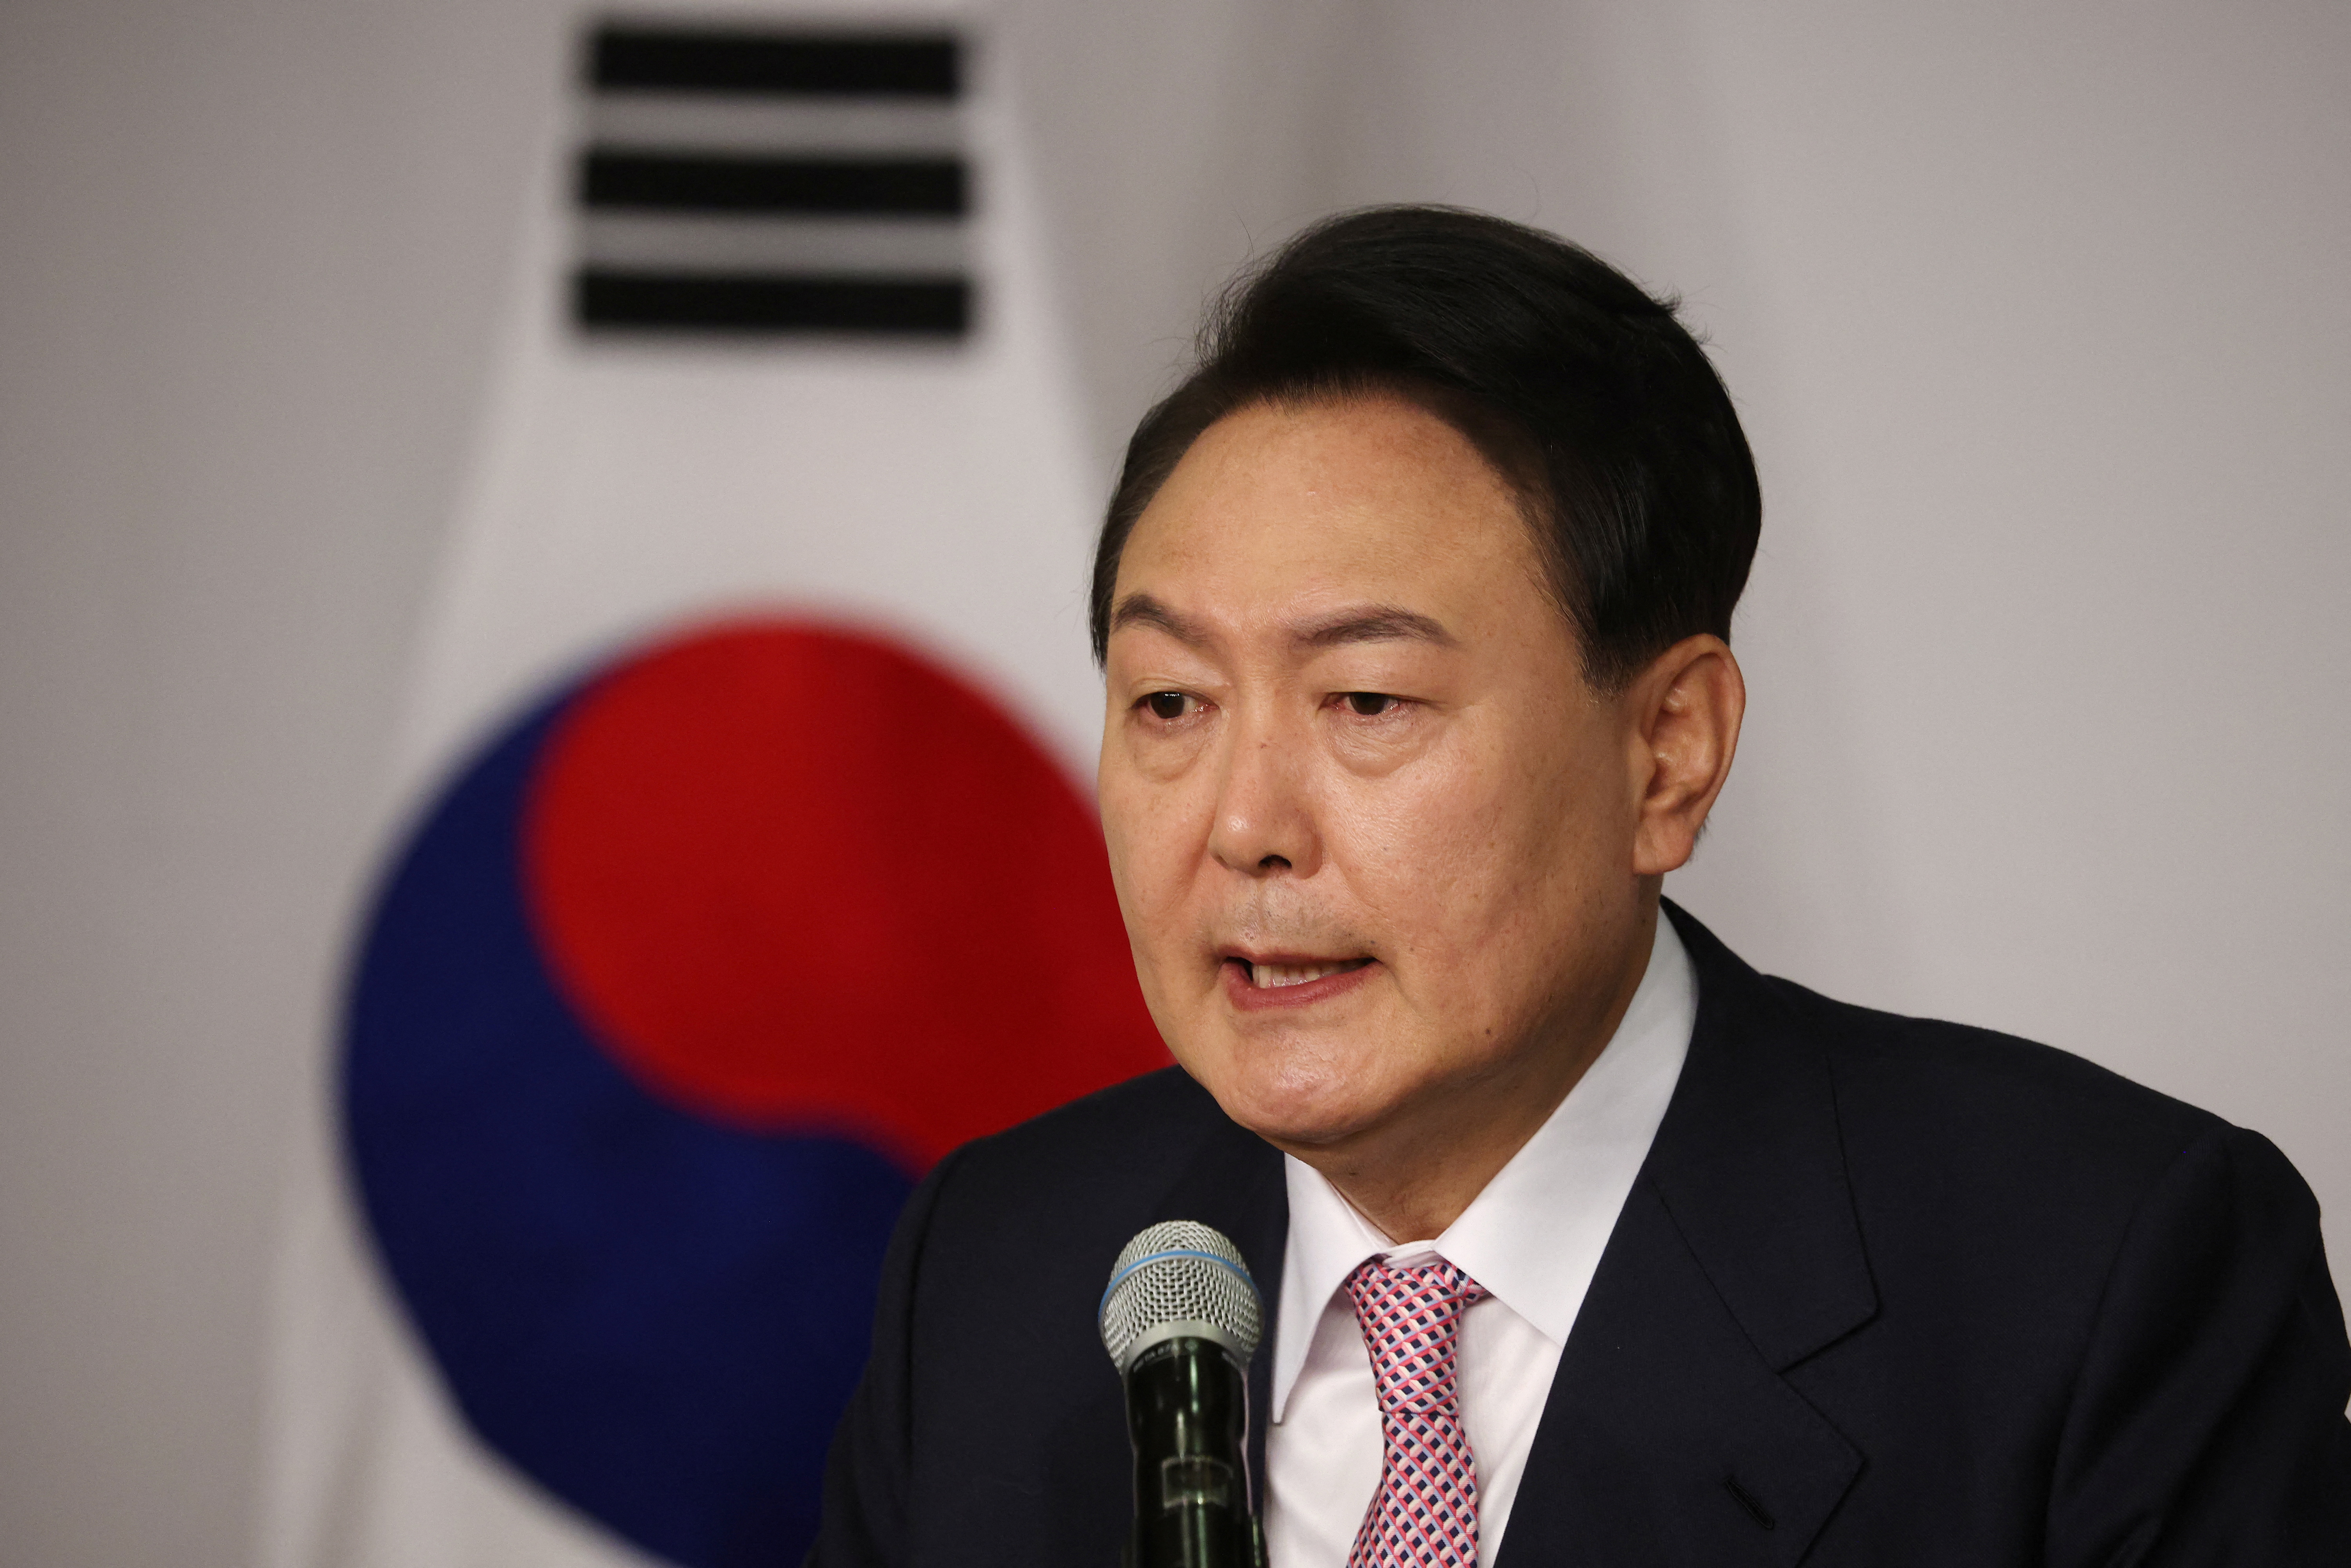 News conference of South Korea's president-elect Yoon Suk-yeol